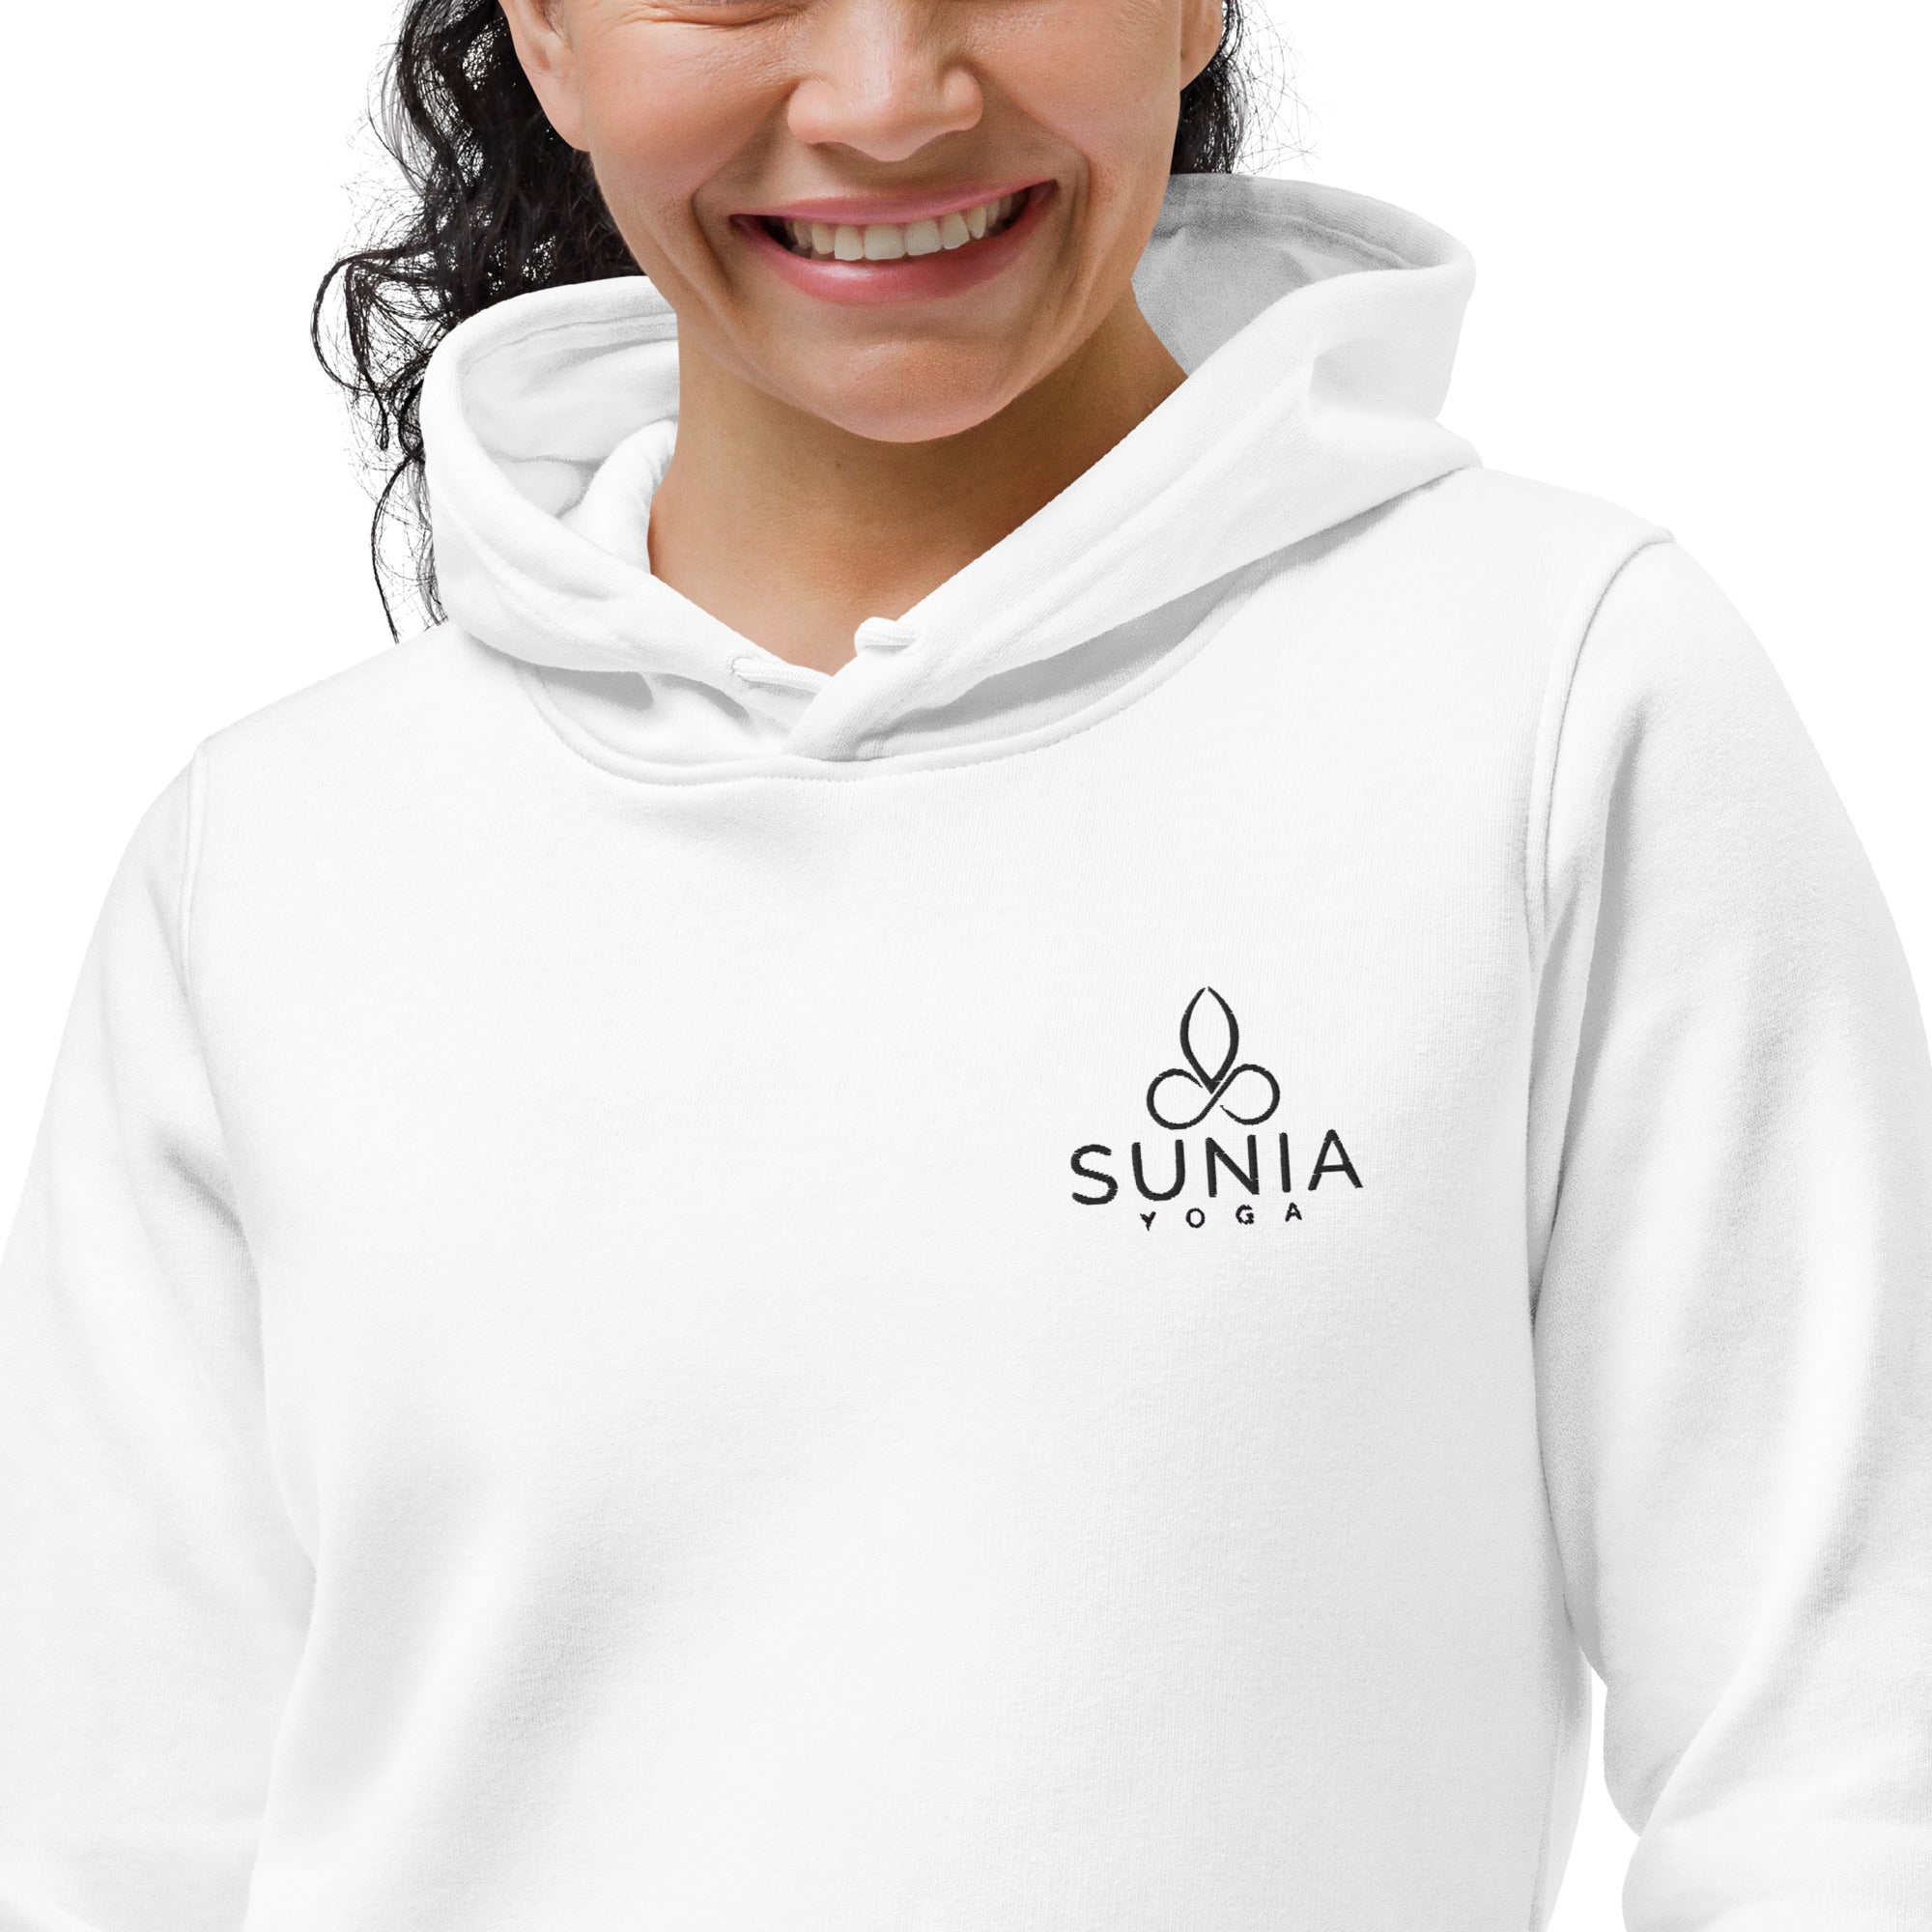 Sunia Yoga Organic Embroidery Fitted Hoodie